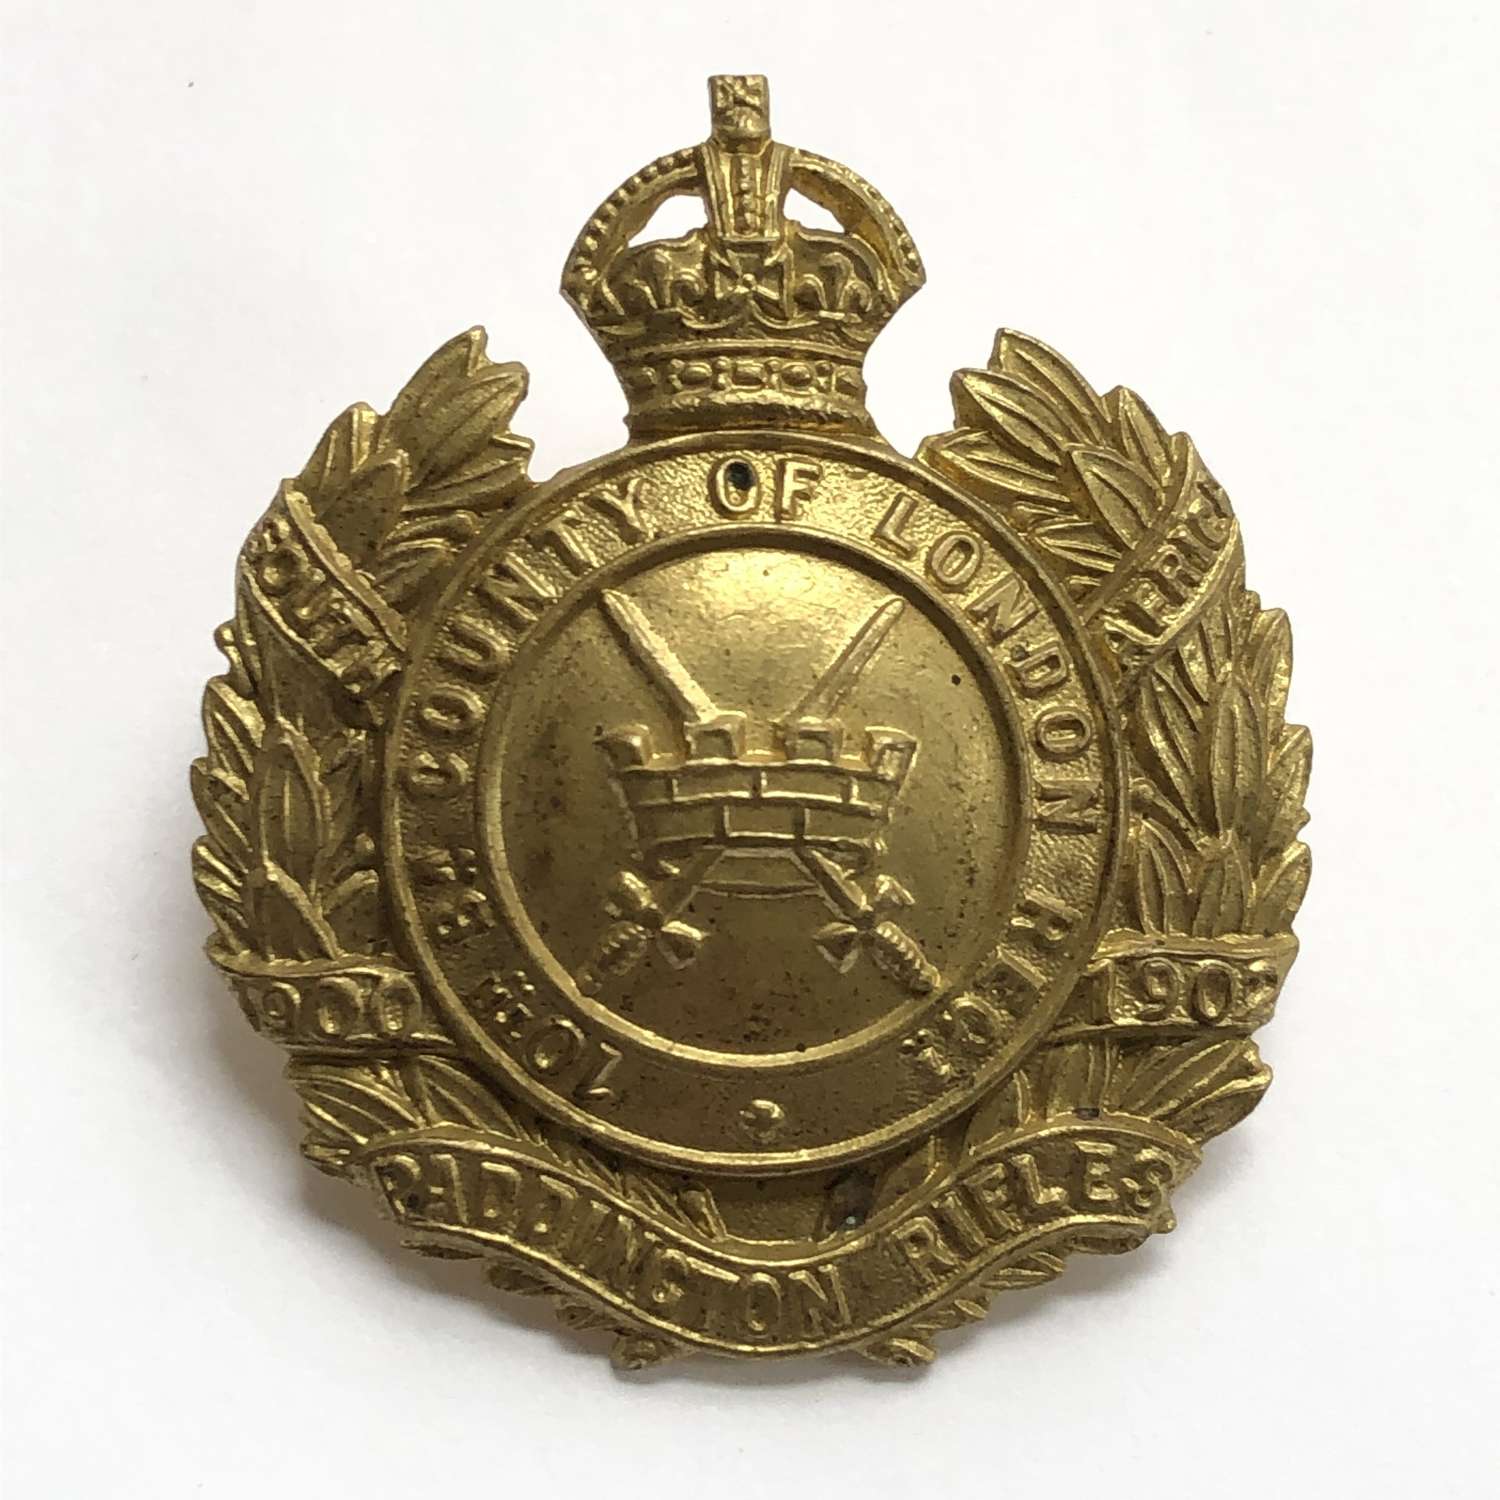 10th London Regiment (Paddington Rifles) cap badge c 1908-12